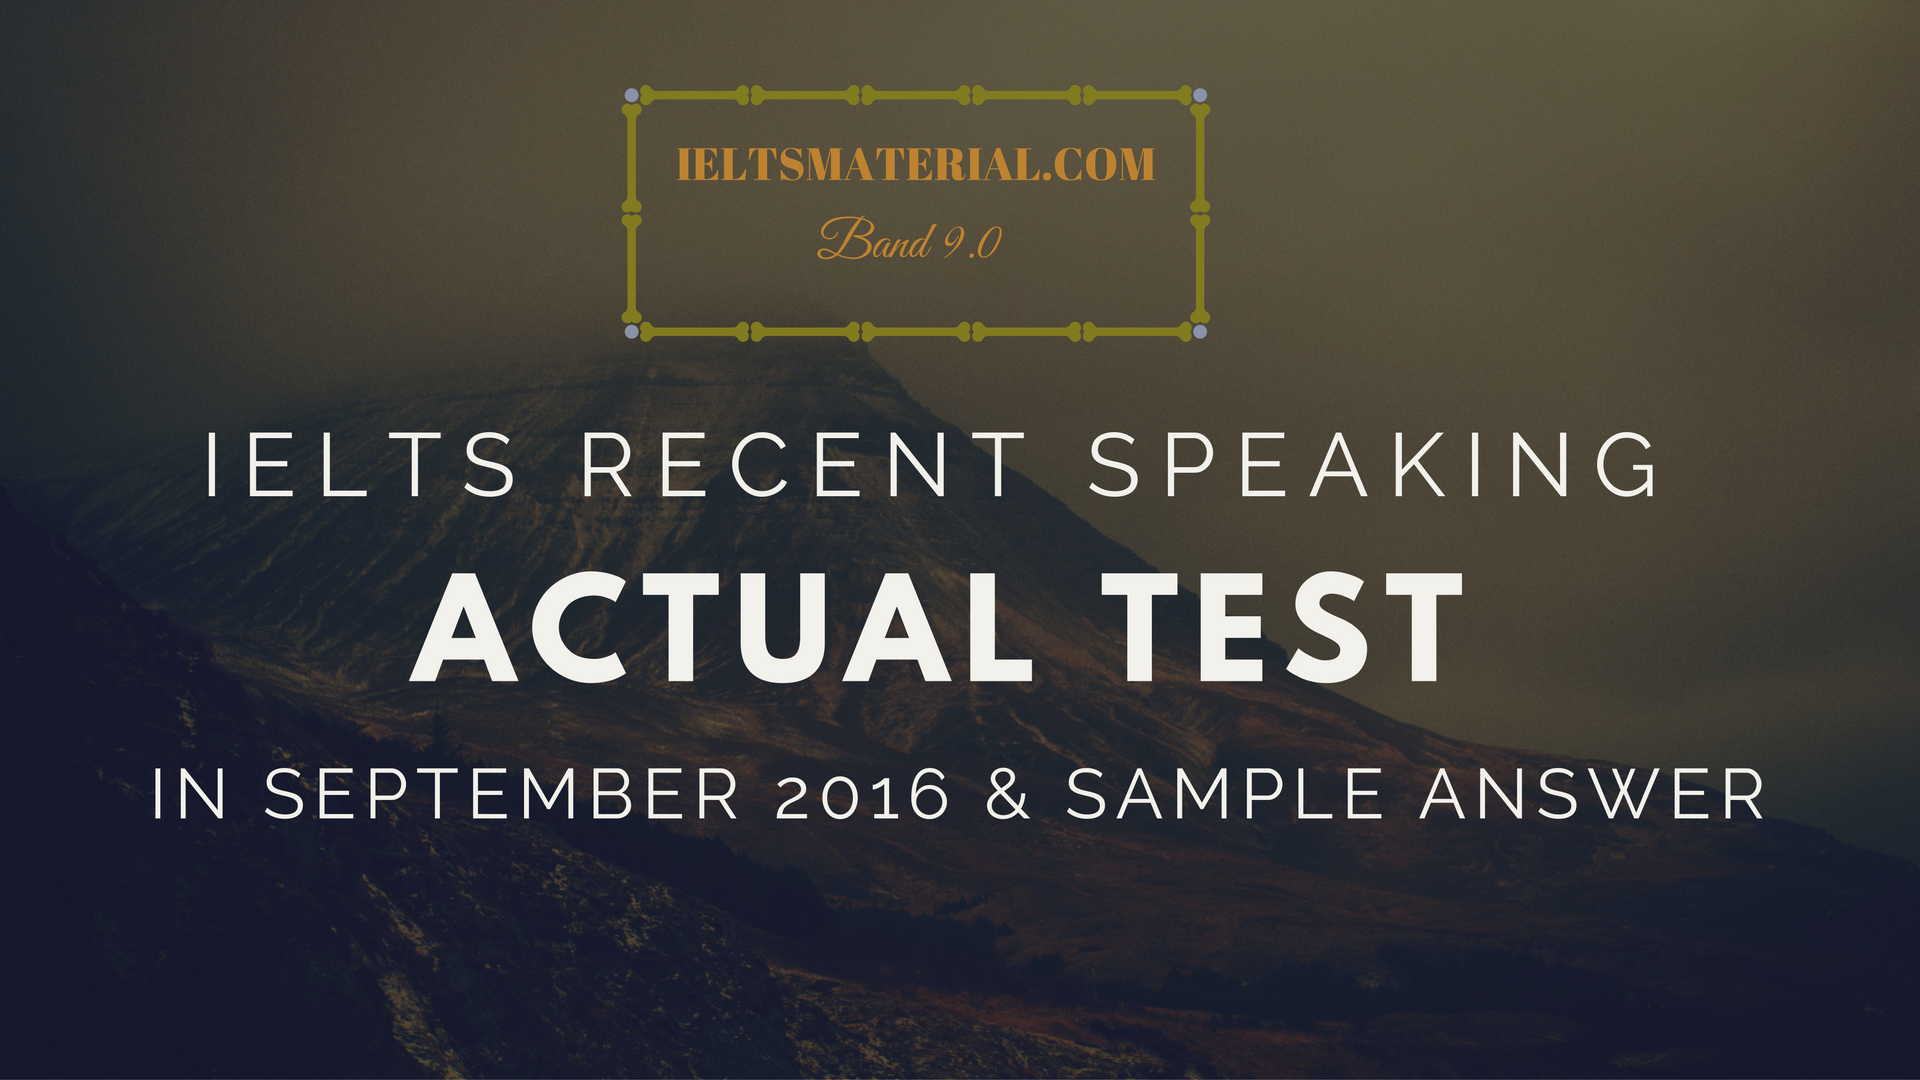 ielts cue sample card speaking Test September in IELTS Actual Recent Speaking 2016